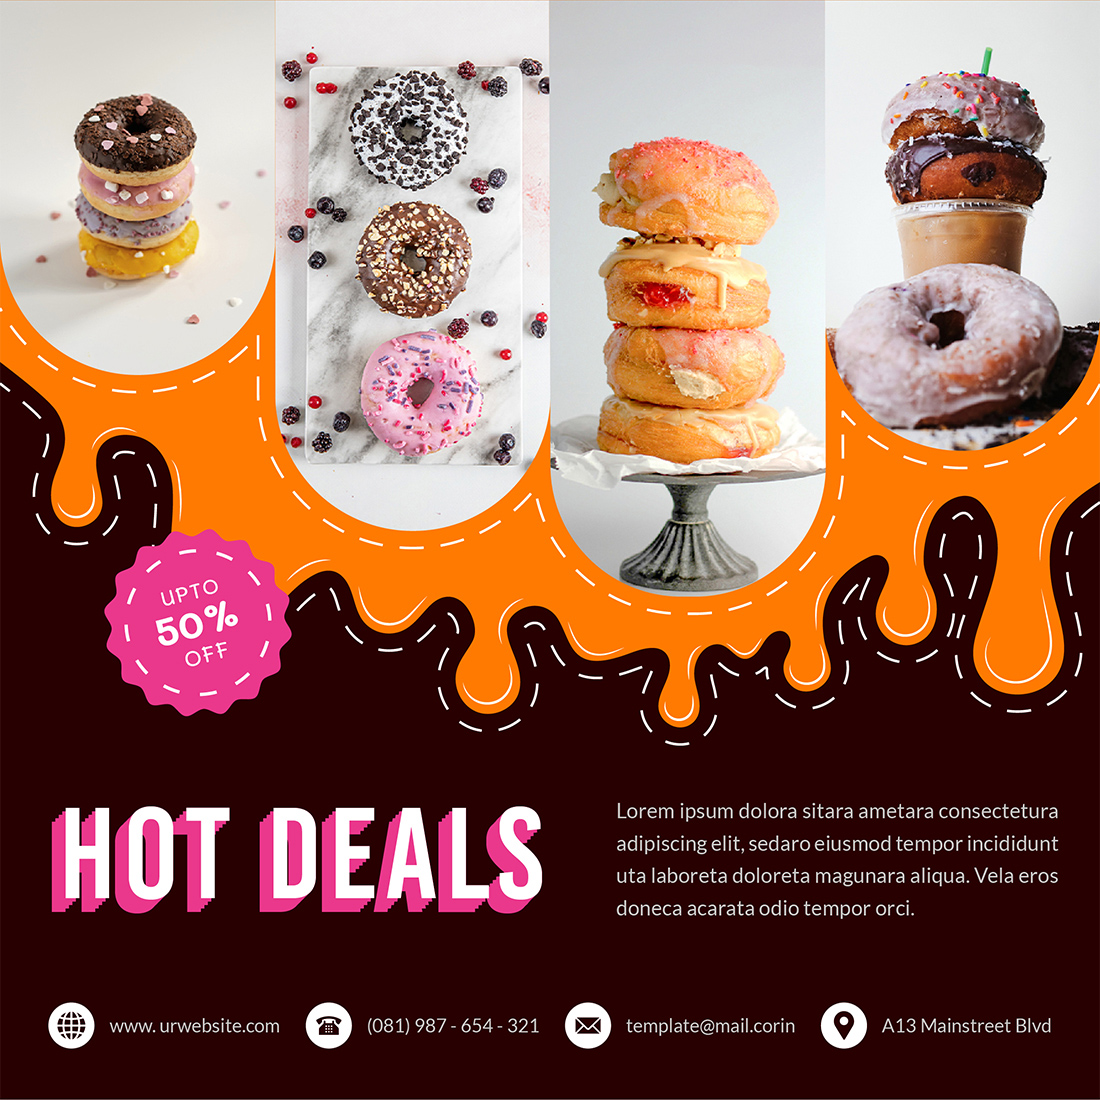 Hot deals example for Delicious Donuts Social Media Post Templates.